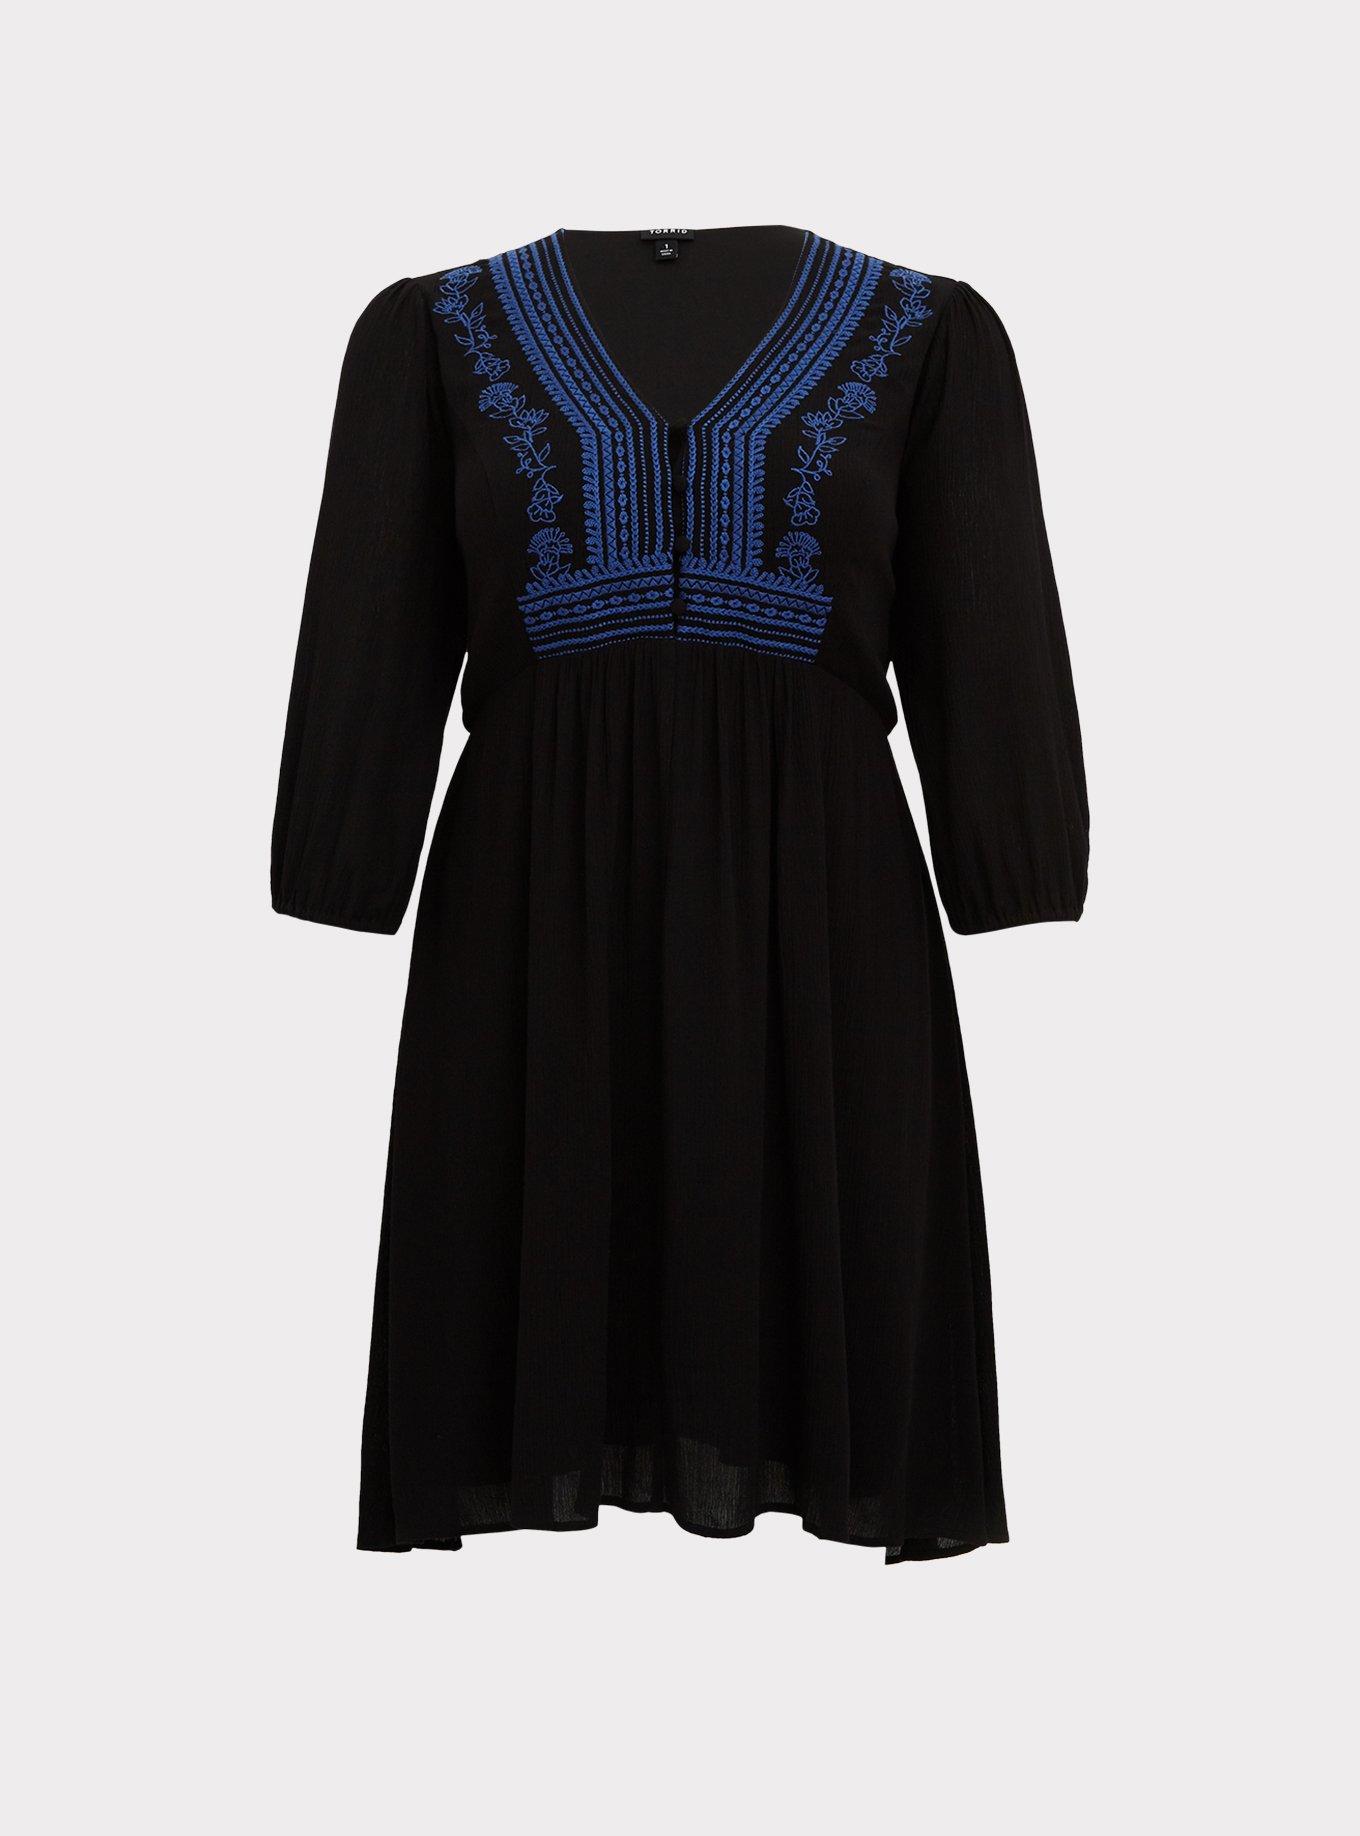 Plus Size - Black Gauze Embroidered Button Down Hi-Lo Dress - Torrid